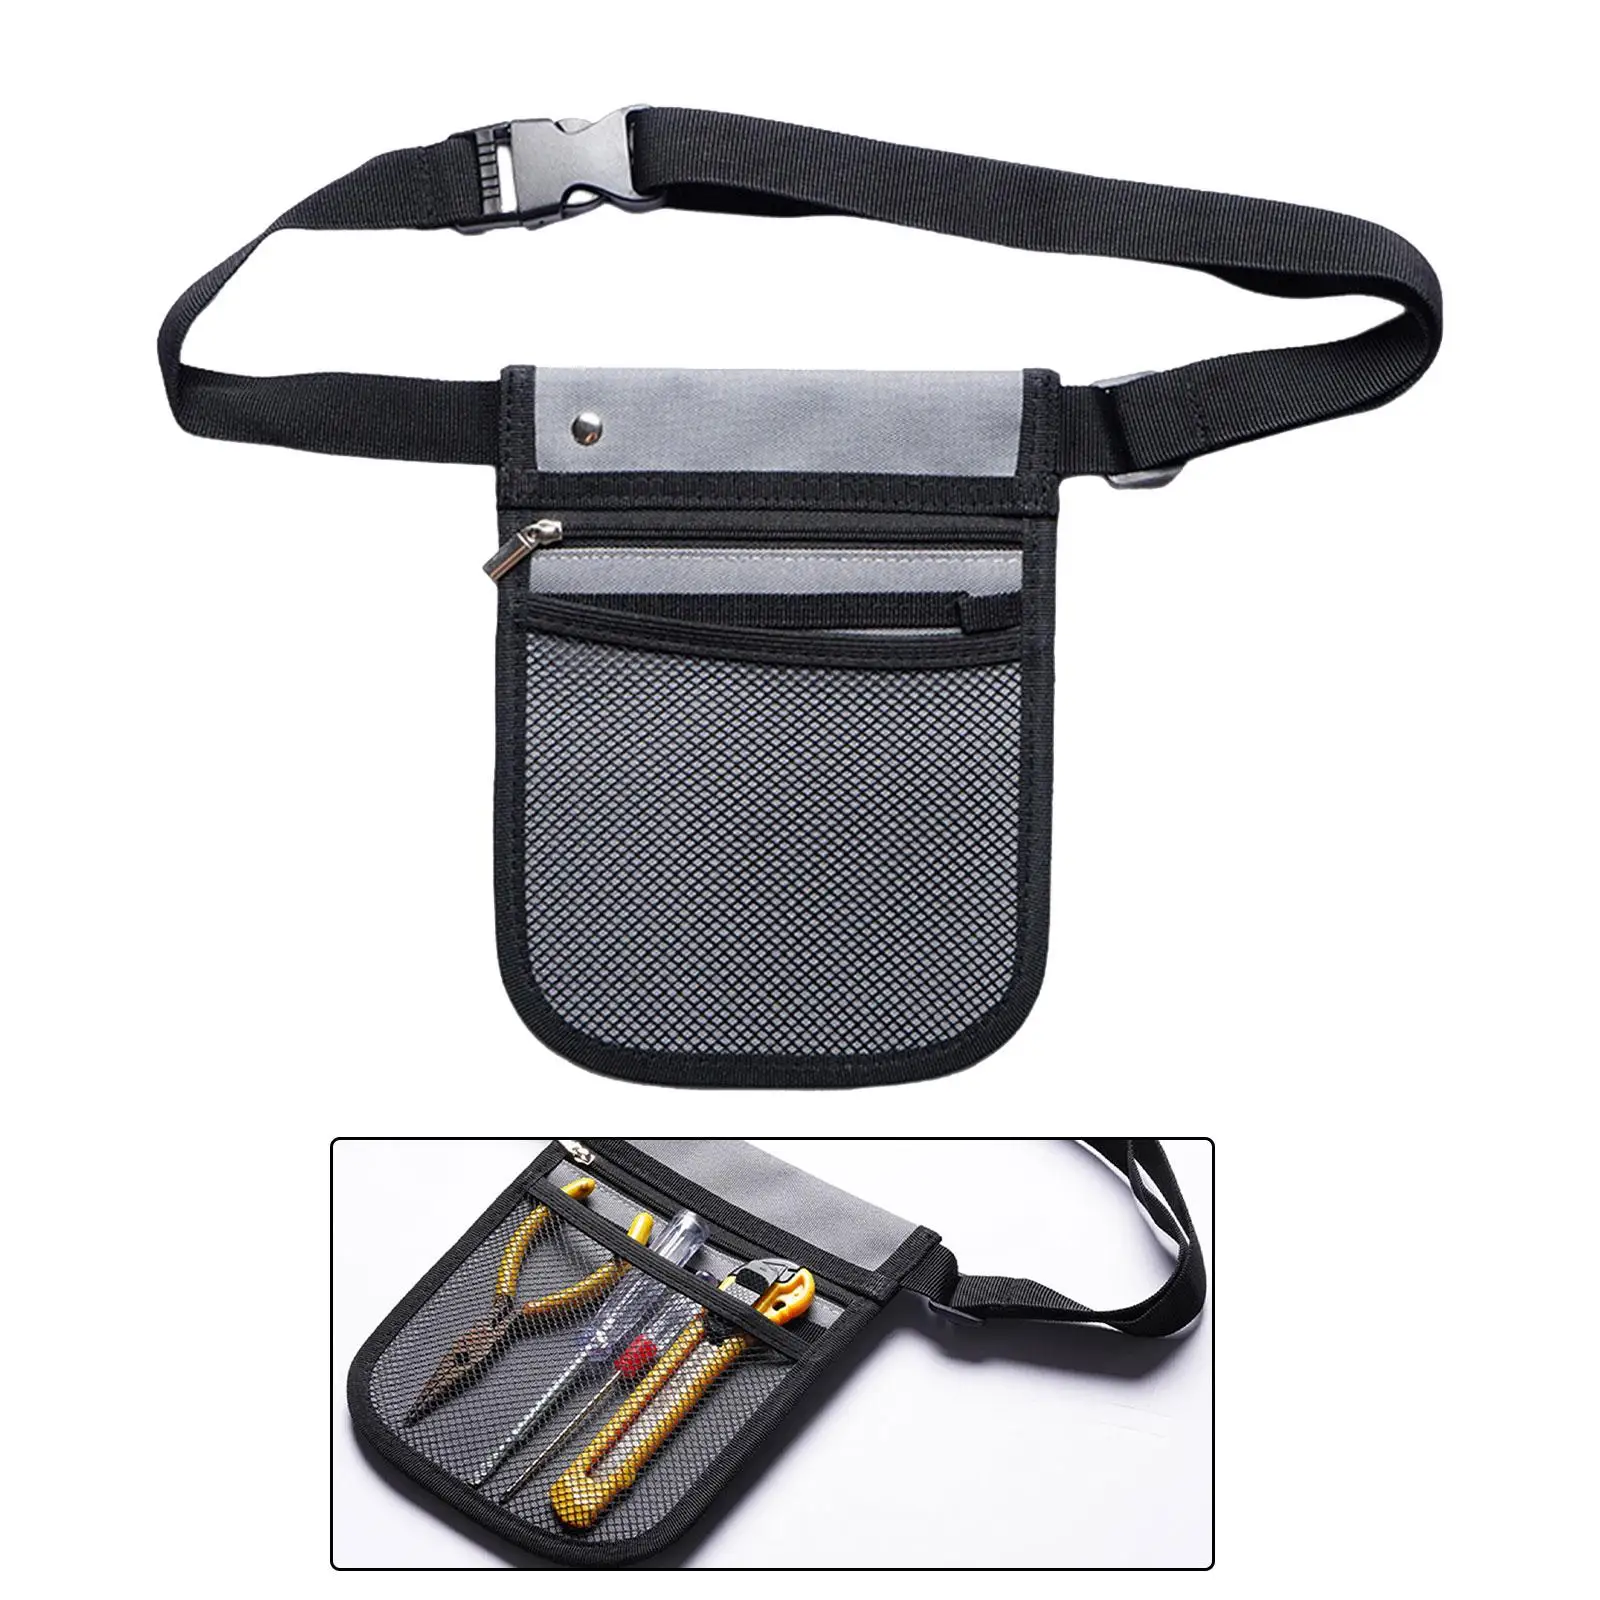  Fanny Pack Organizer Belt Multi Pockets Waist Bag Storage Belt Utility Apron Hip Bag Pouch for Nurses, Trades, Workers